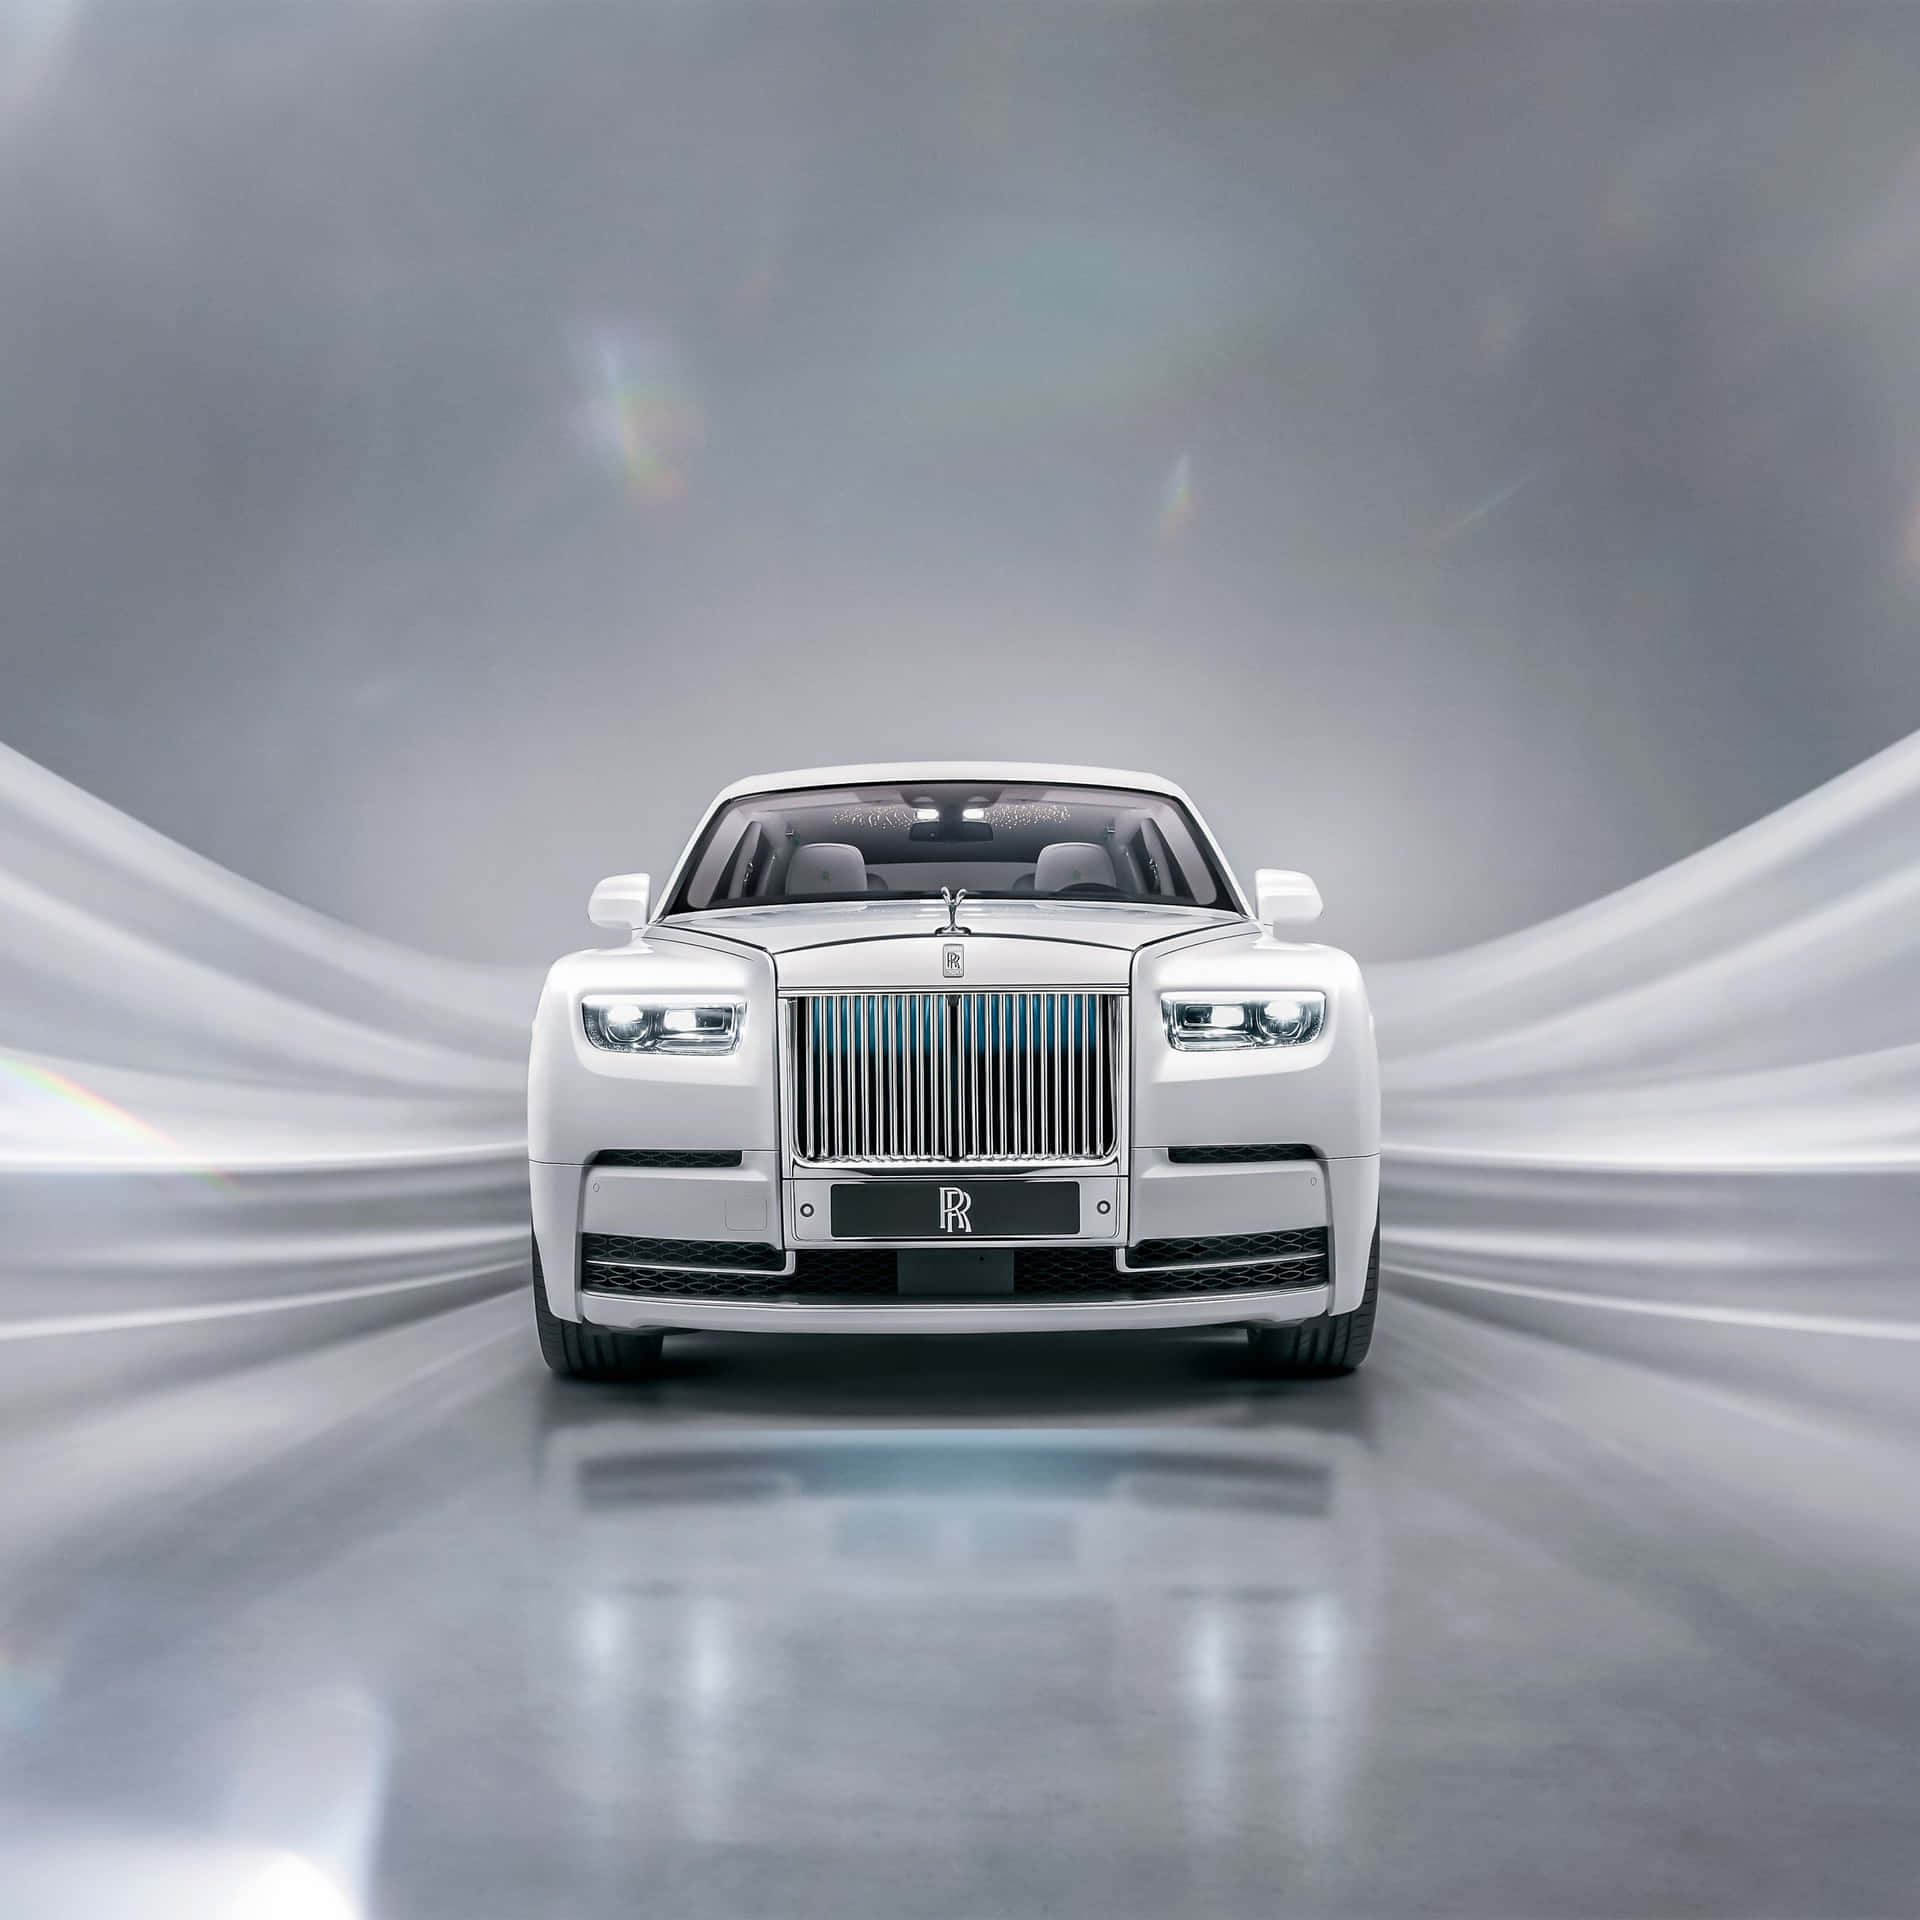 Extravagant Rolls Royce Phantom Wallpaper